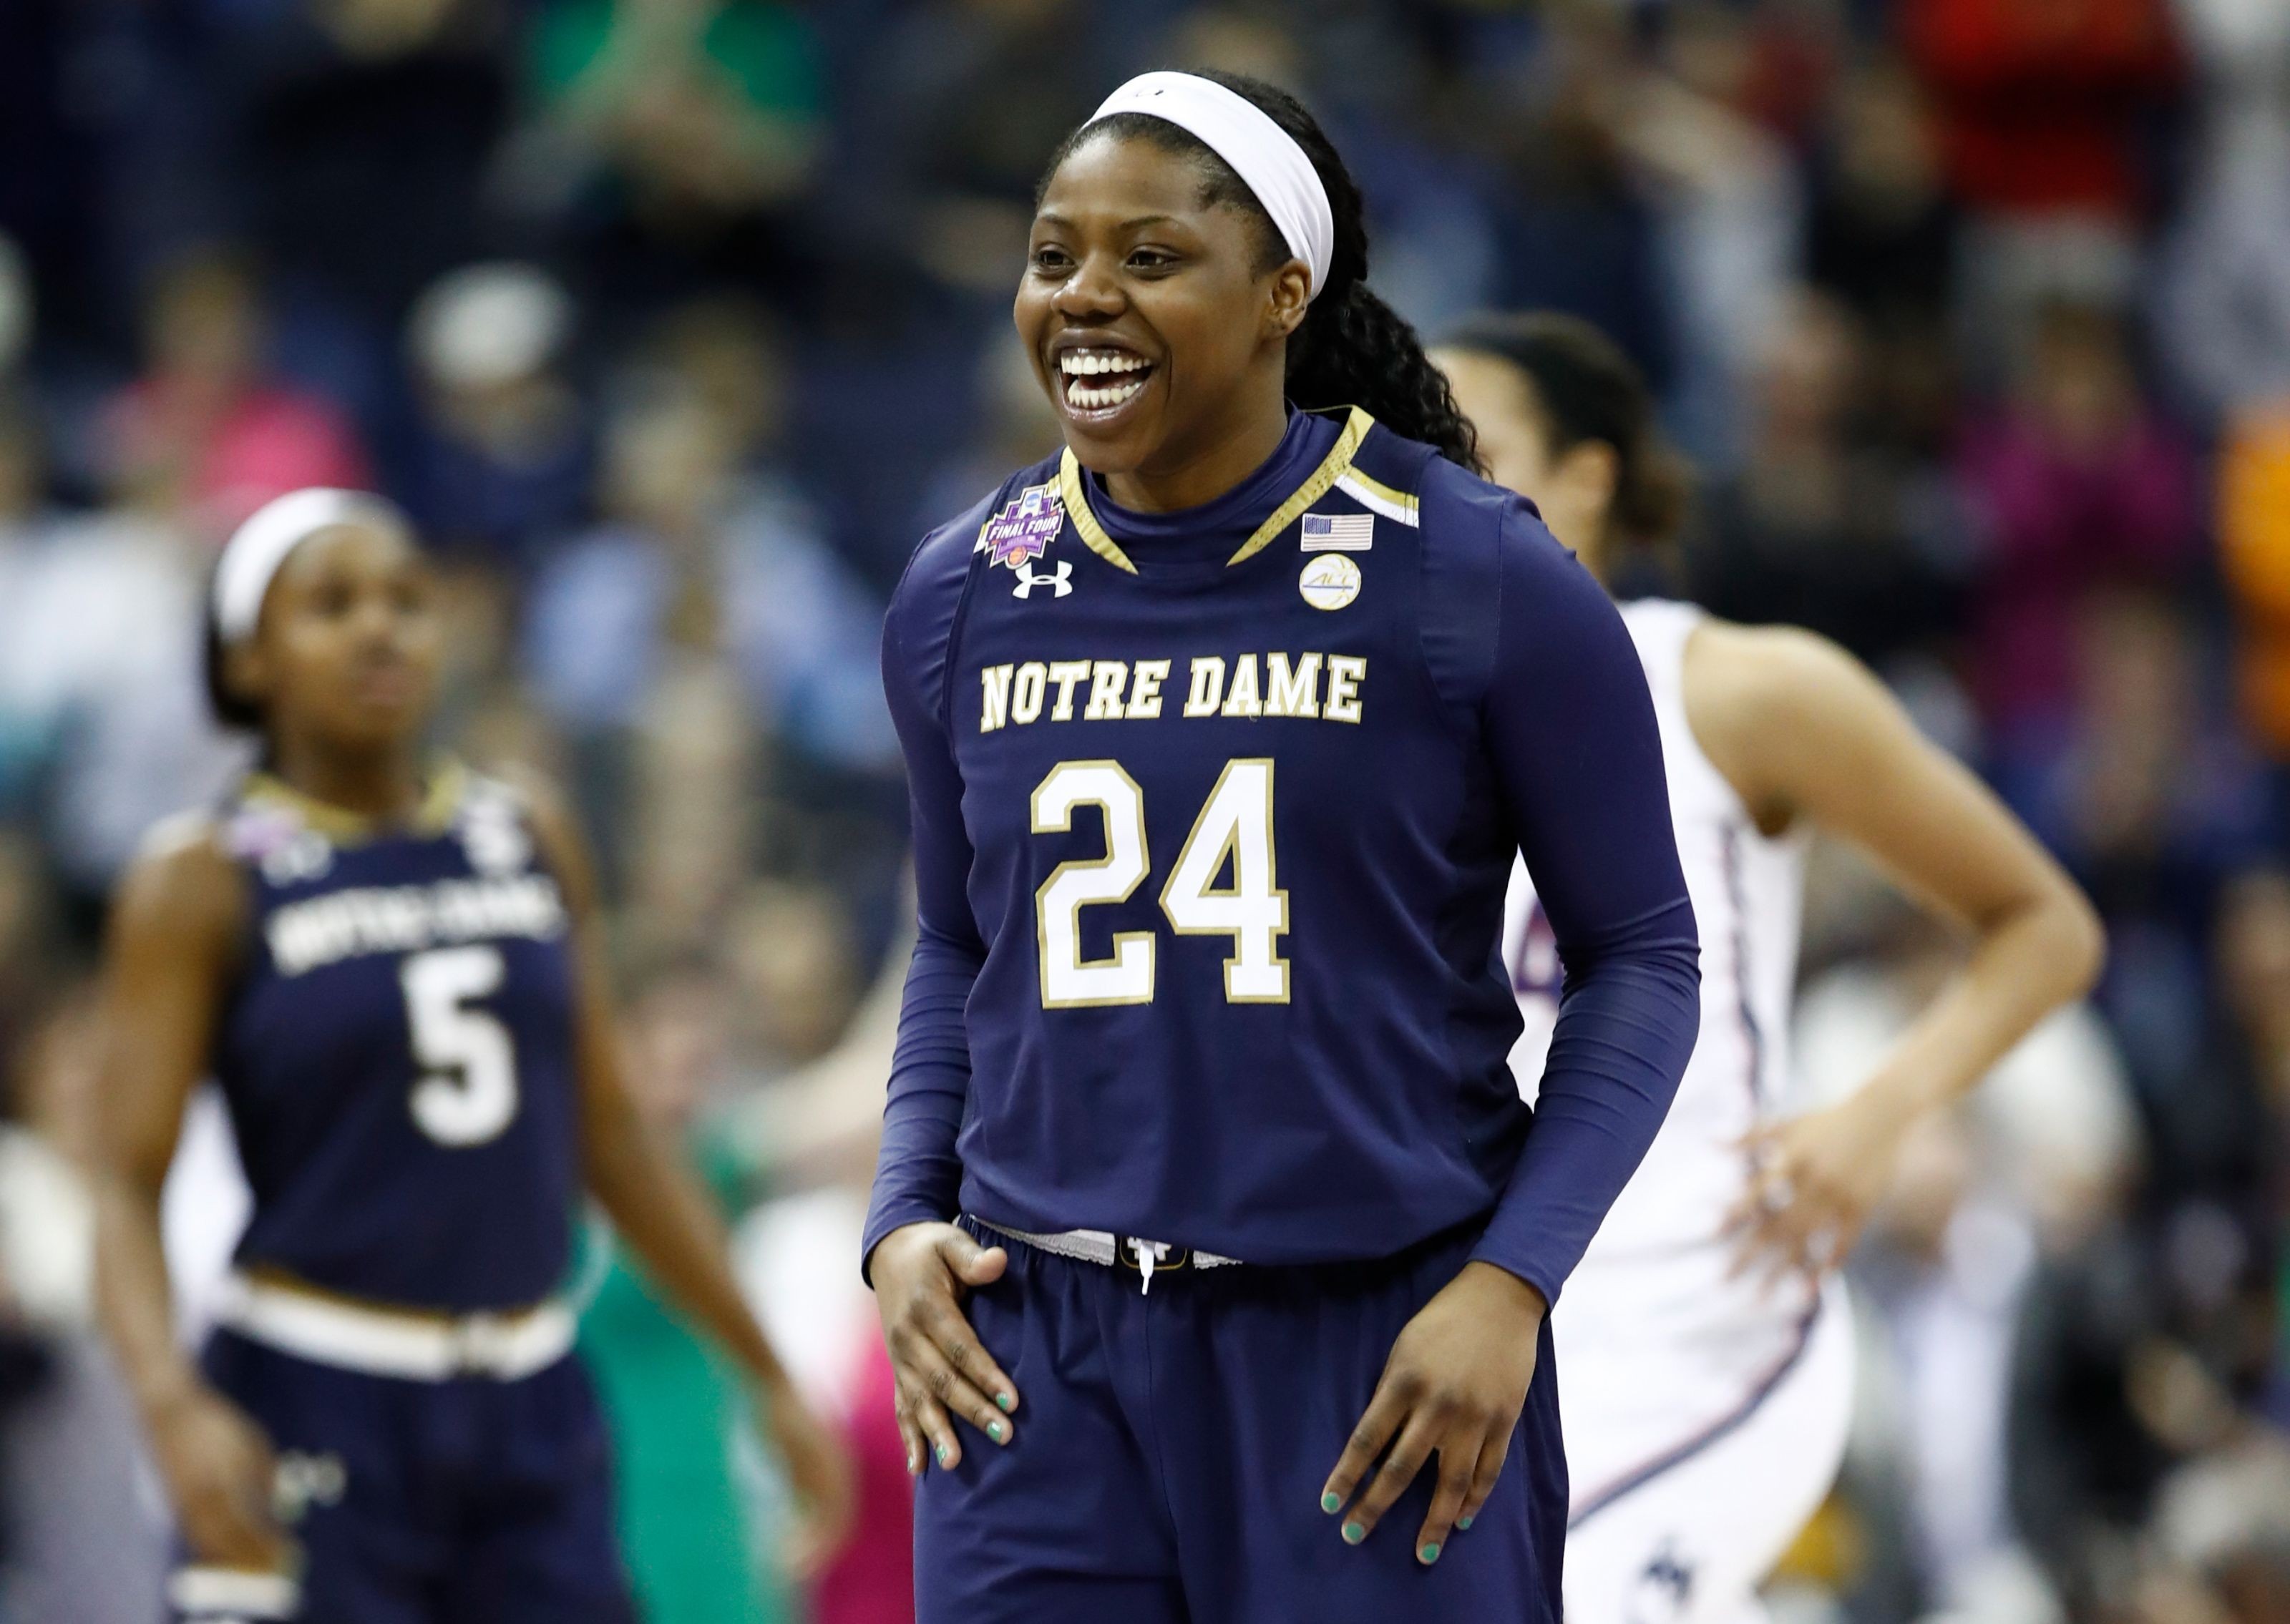 Notre Dame Women’s Basketball: Ogunbowale becomes all-time leading scorer